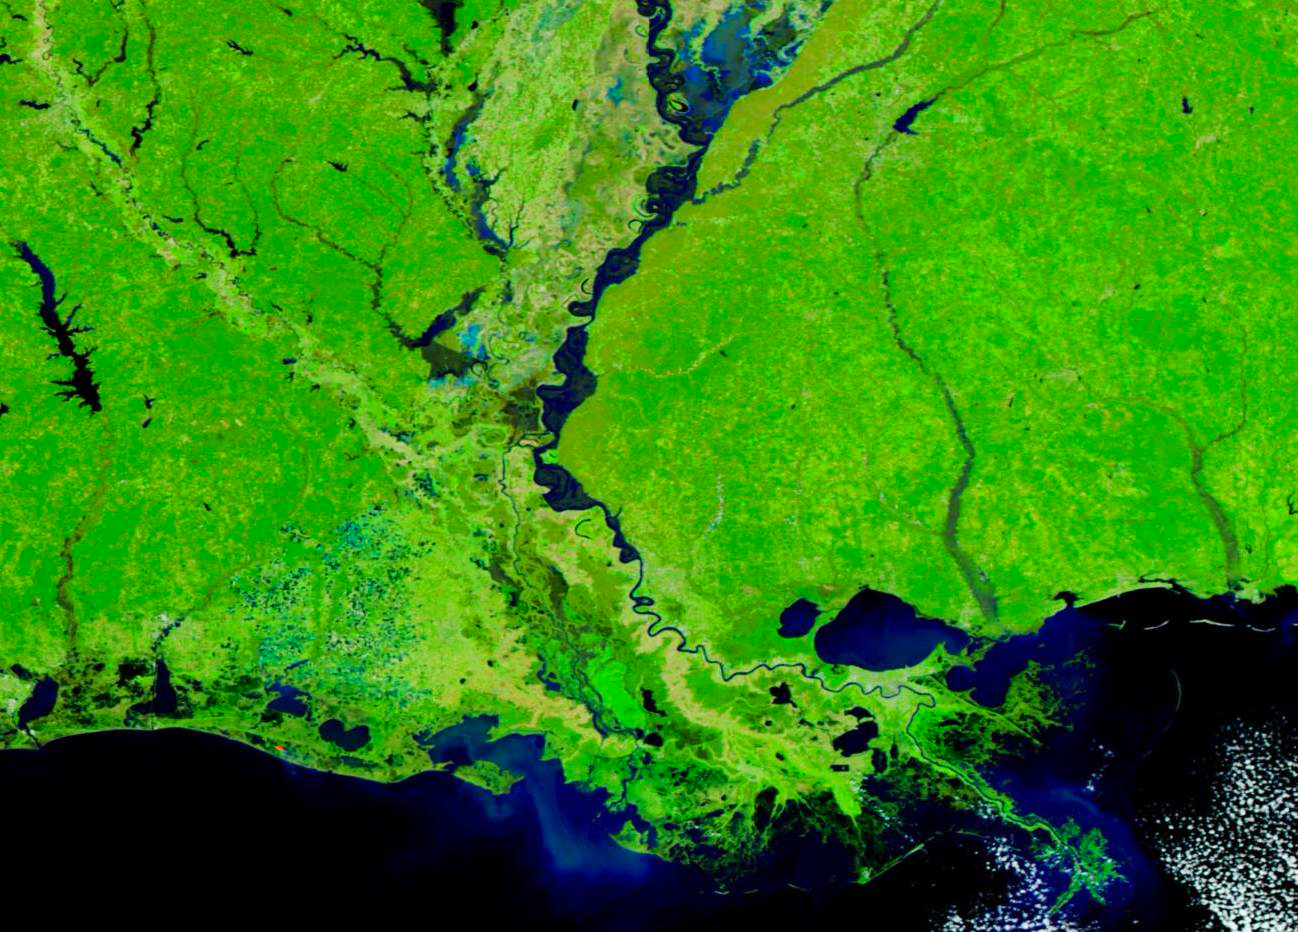 mississippi river flood maps